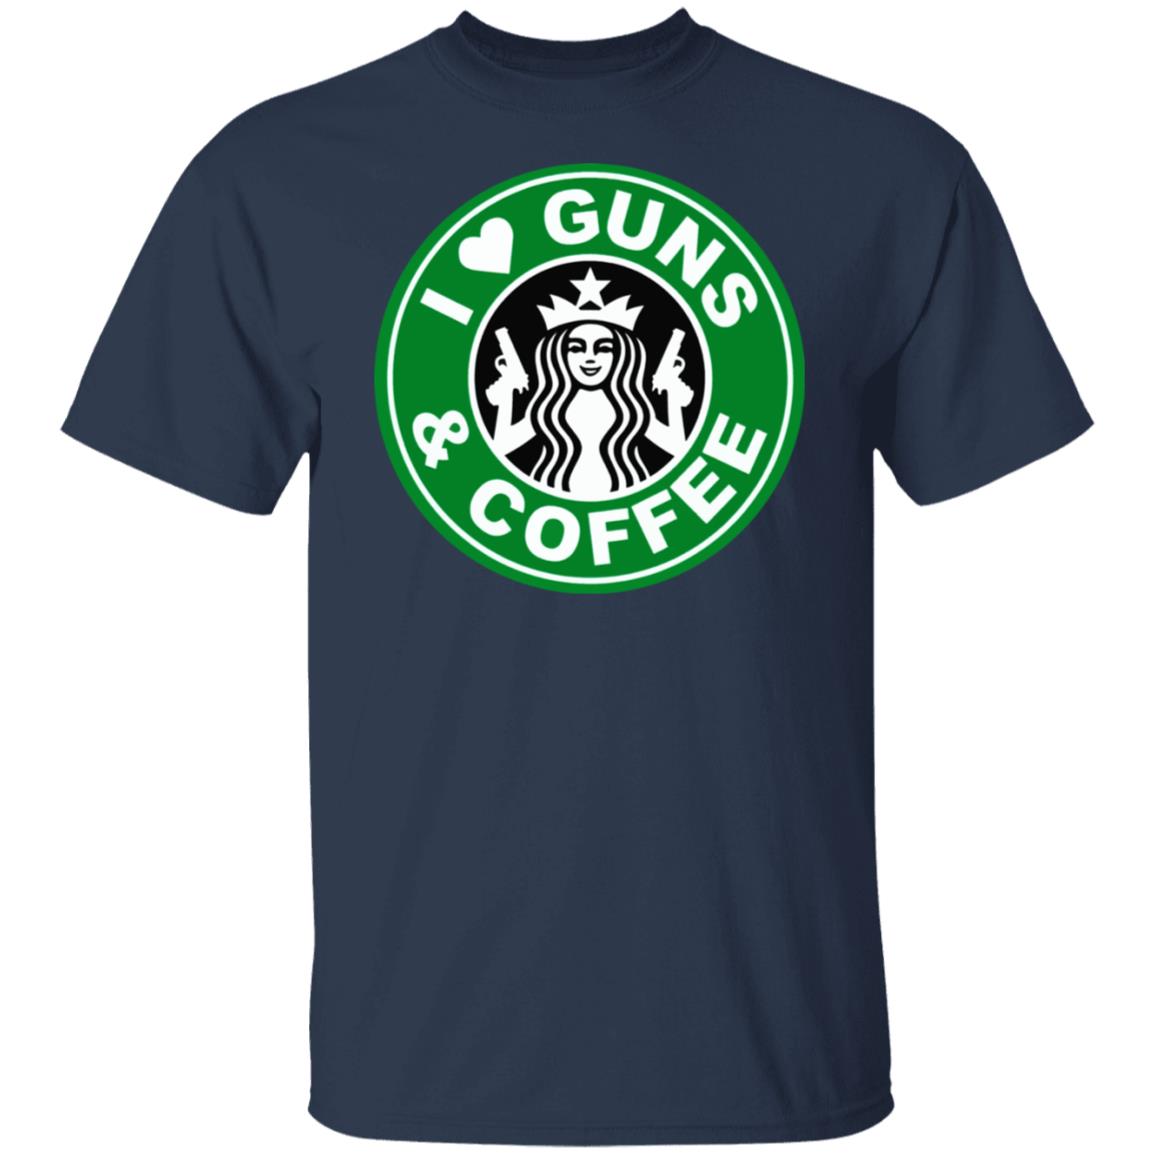 I Love My Guns 'N Coffee Shirt 